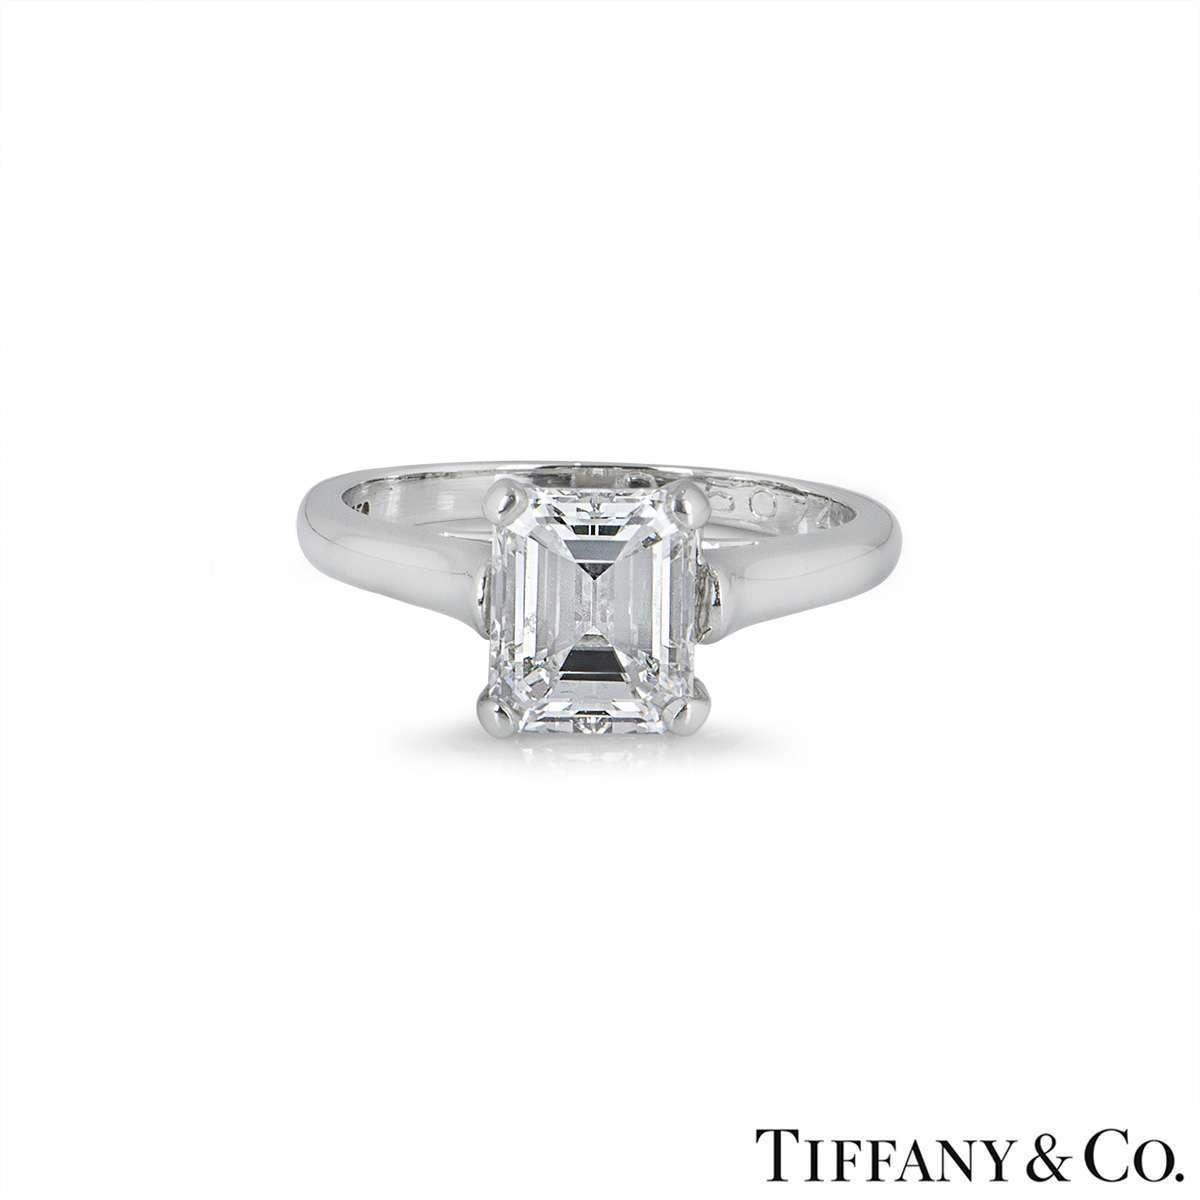 3 stone emerald-cut diamond ring tiffany